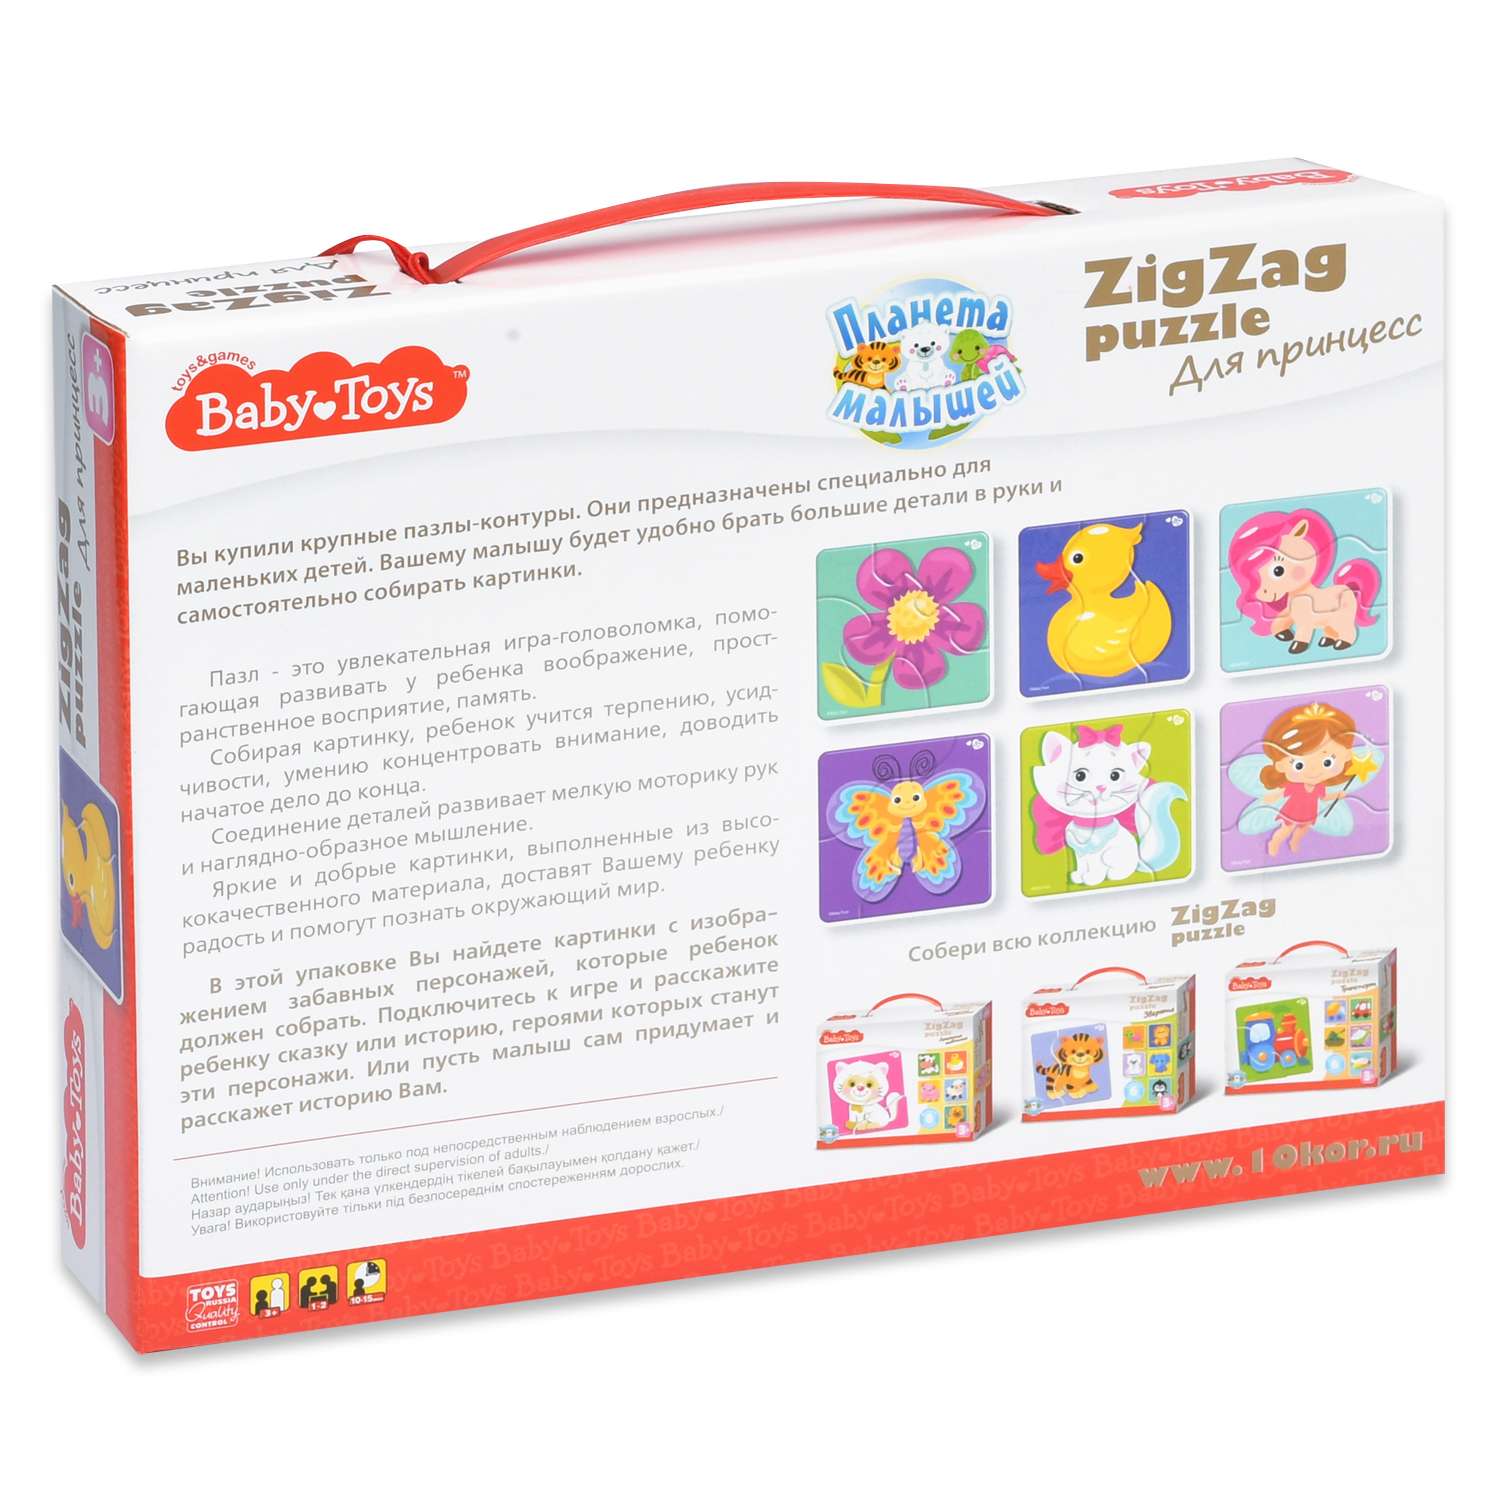 Пазл Десятое королевство Baby toys Для принцесс Зигзаг 02503 - фото 2